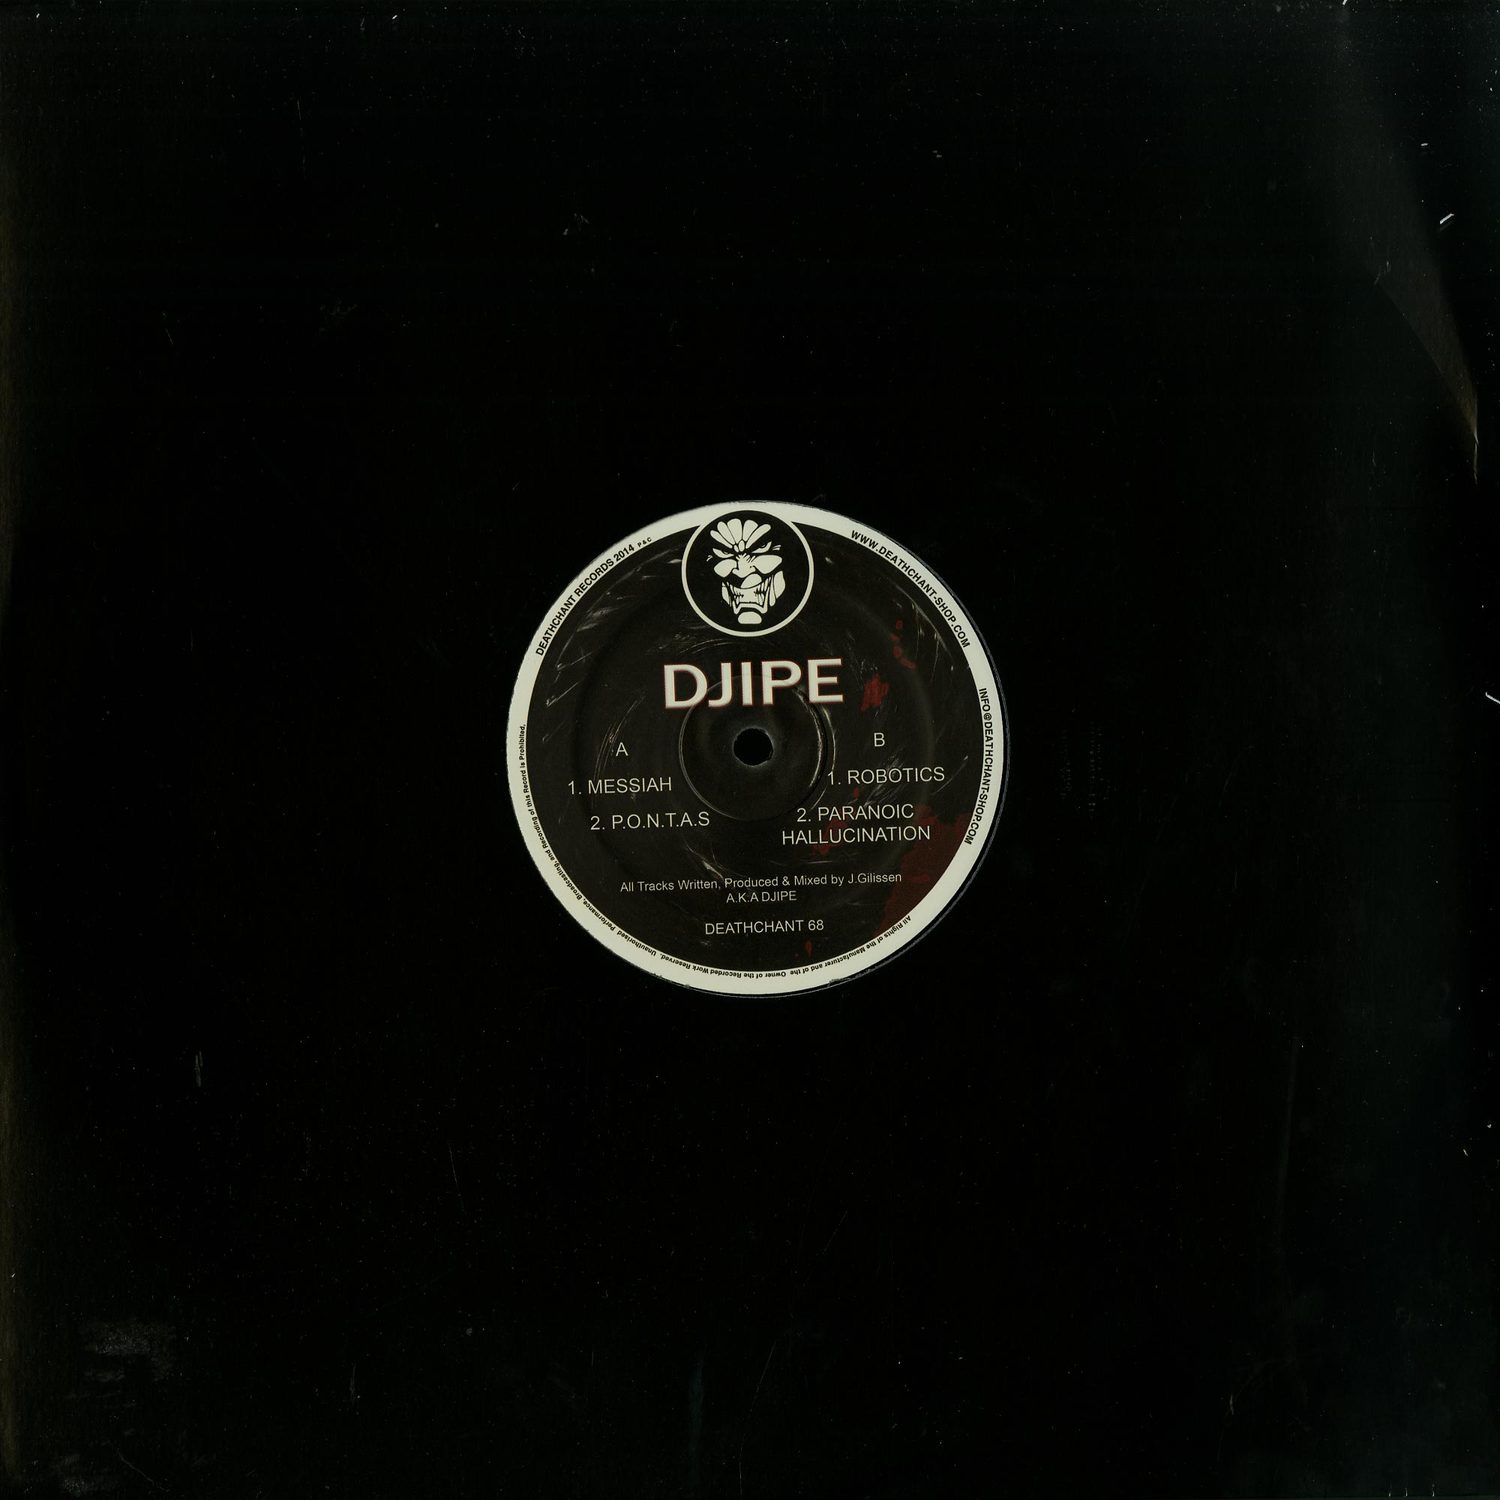 DJipe - DEATHCHANT 68